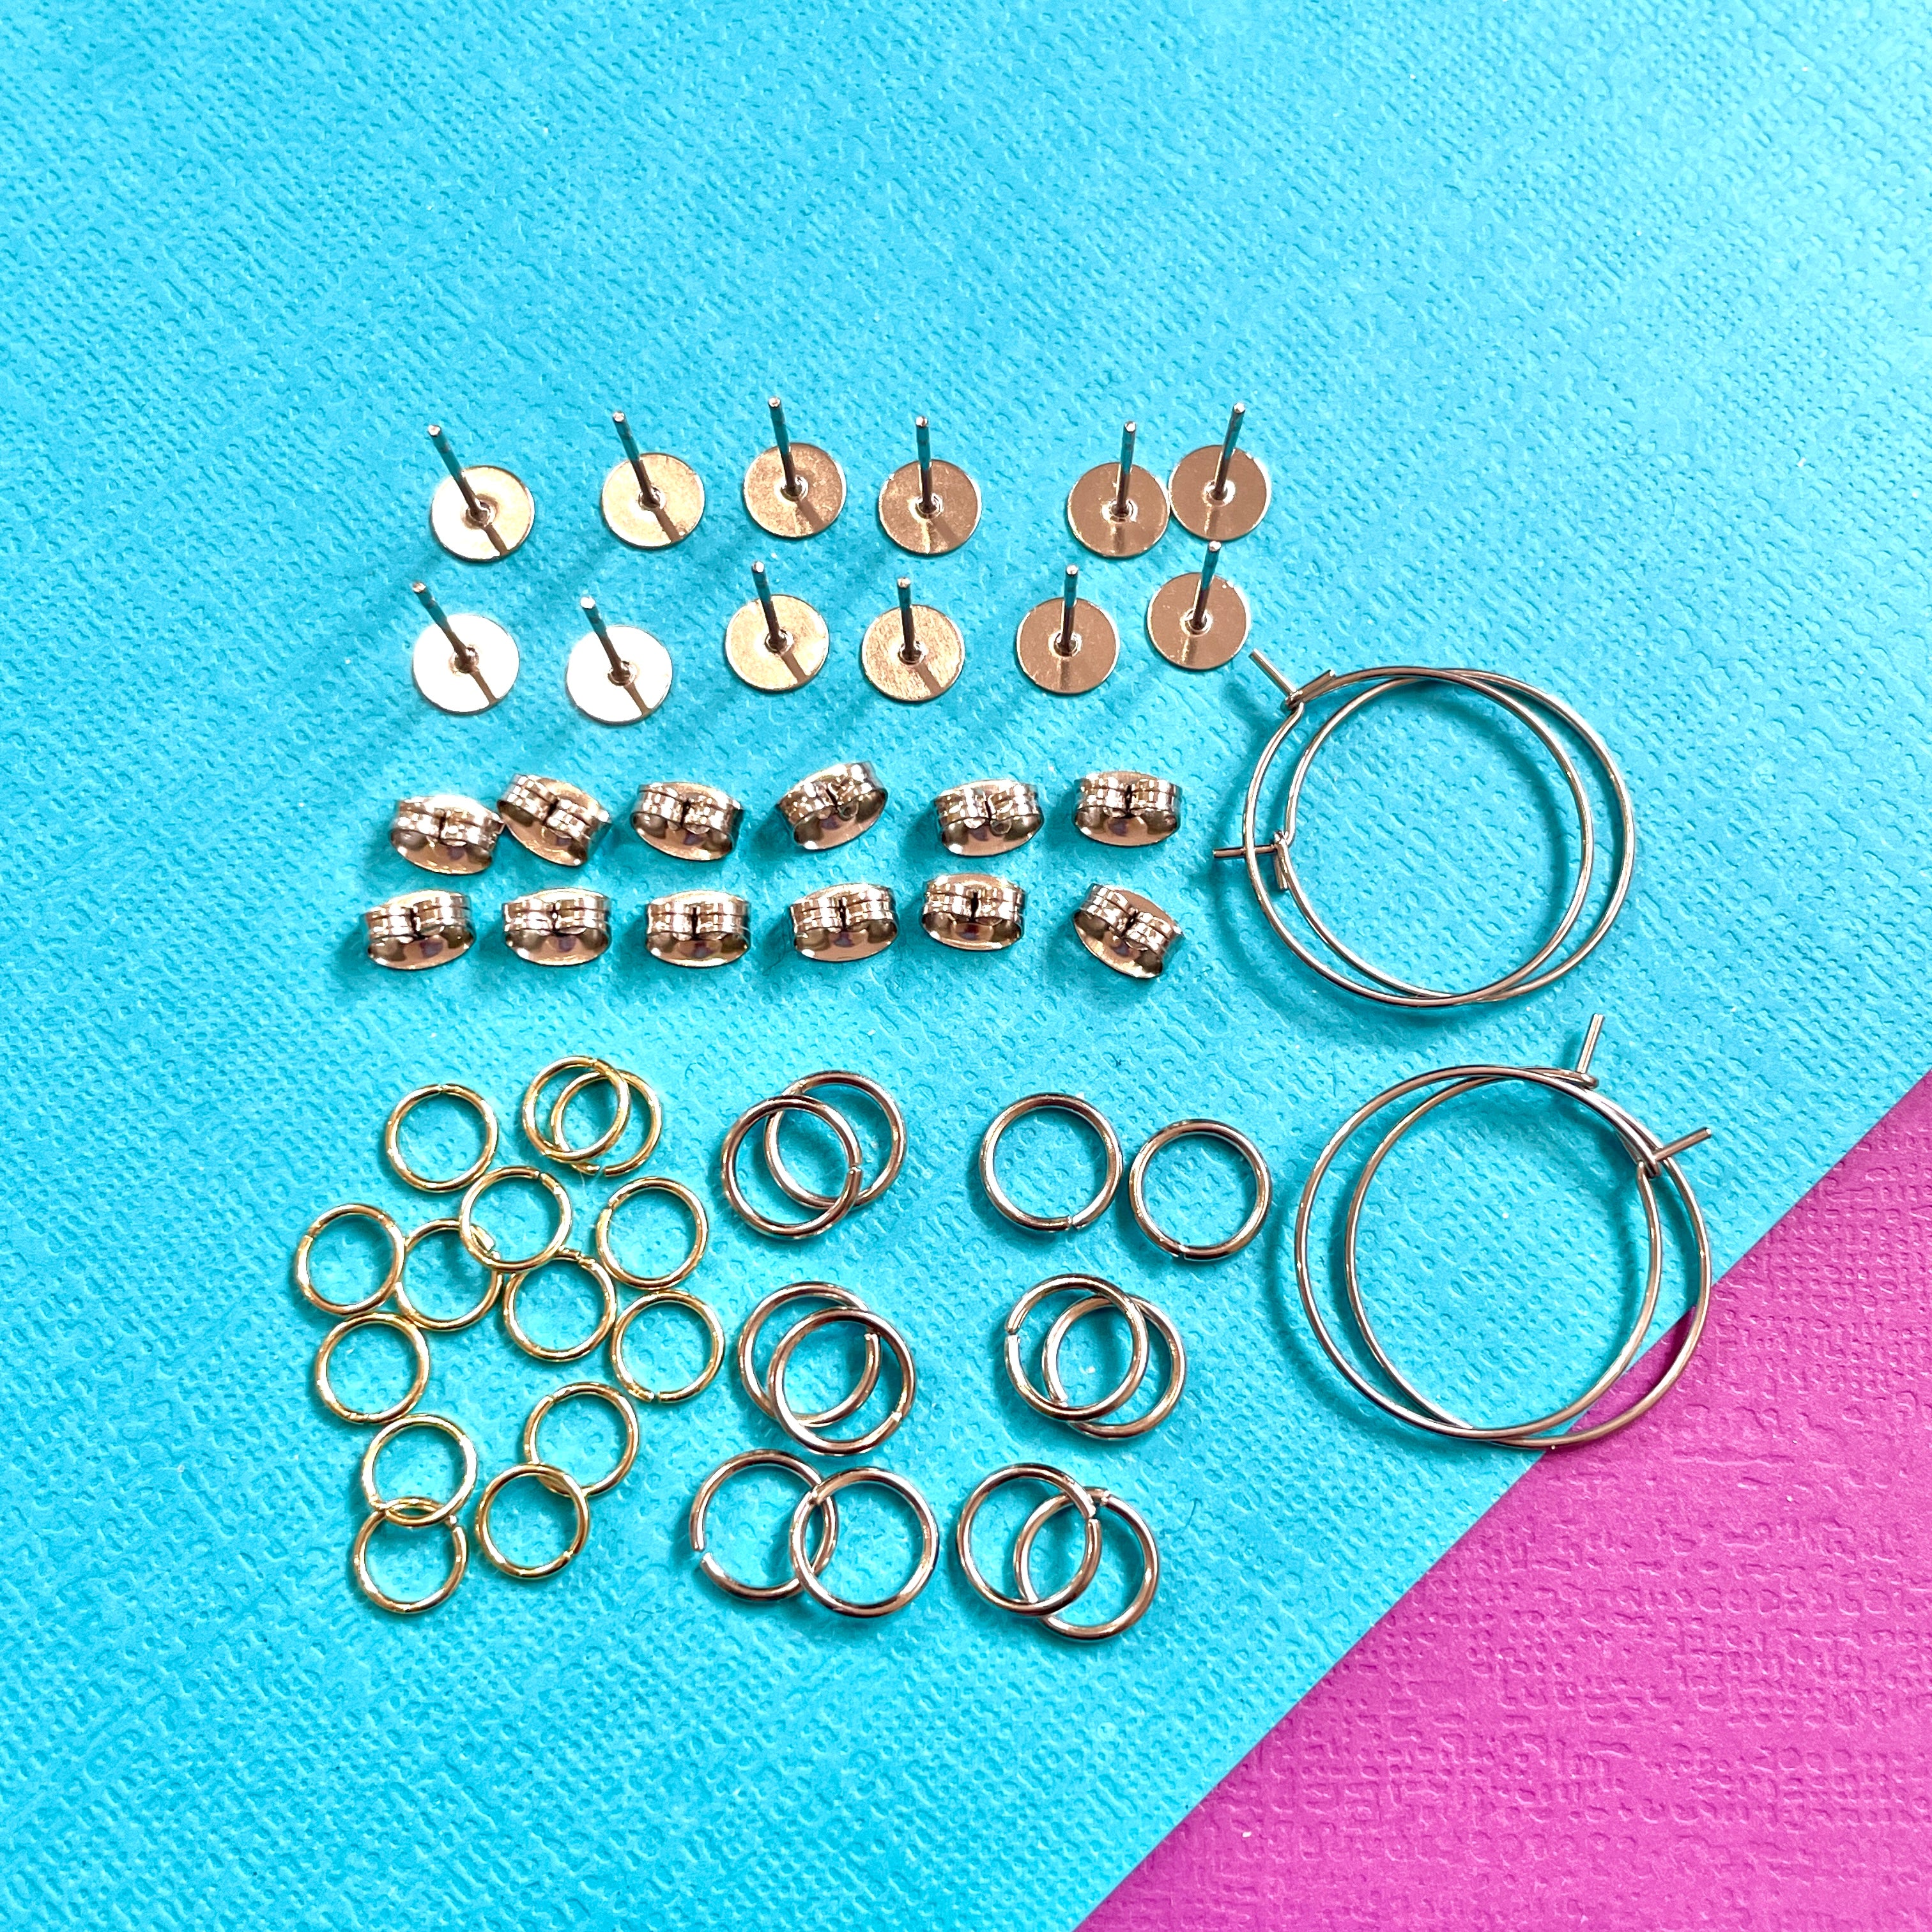 DIY Acrylic Earring Kit - LARGE